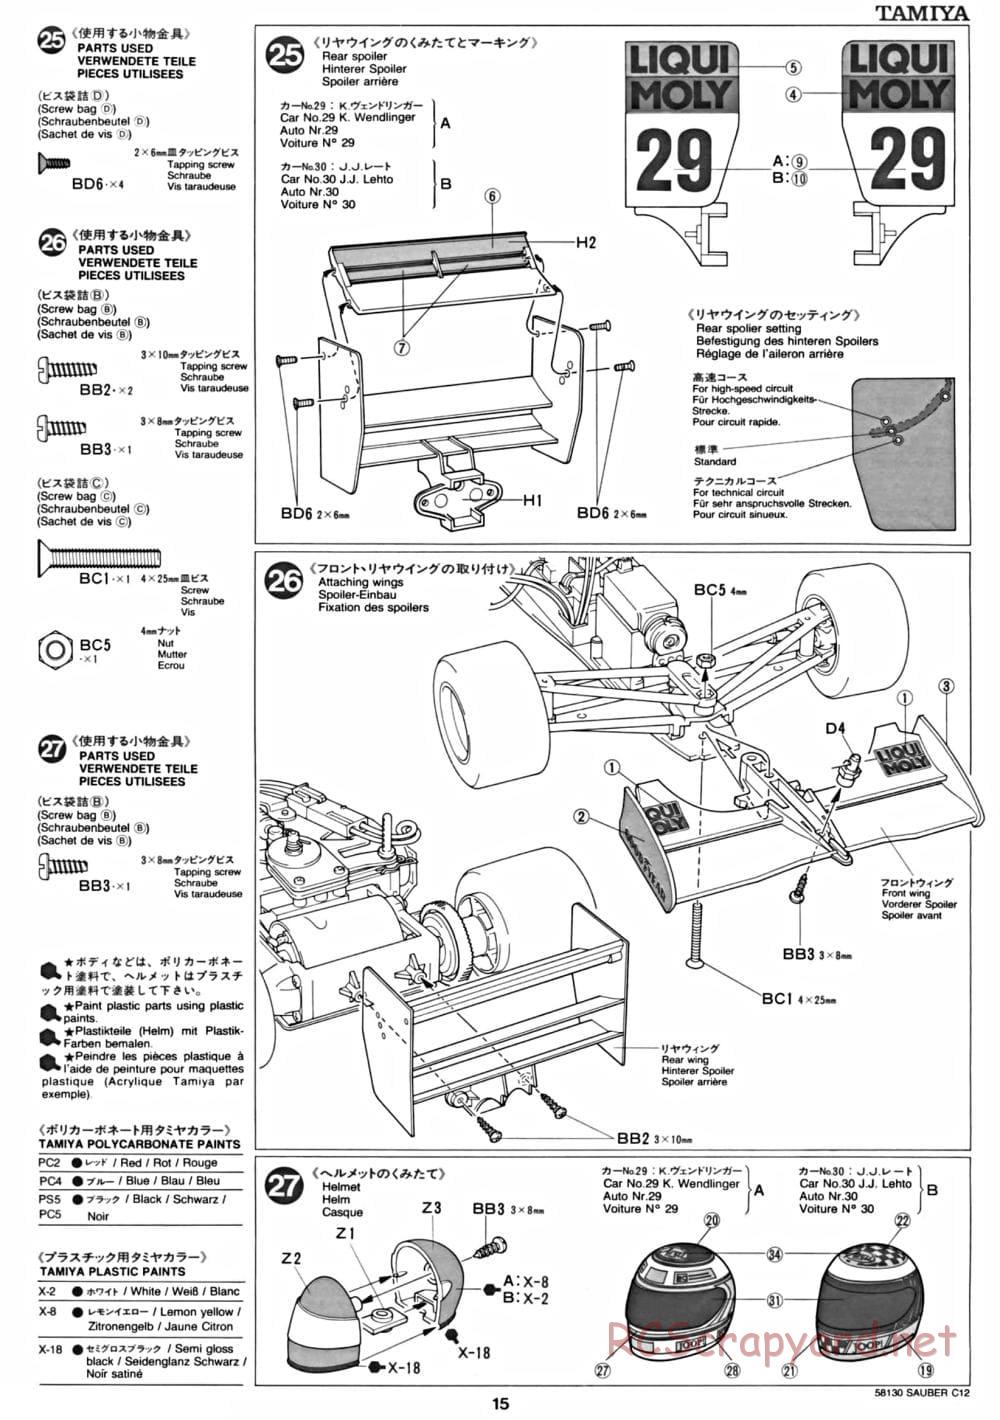 Tamiya - Sauber C12 - F103 Chassis - Manual - Page 15